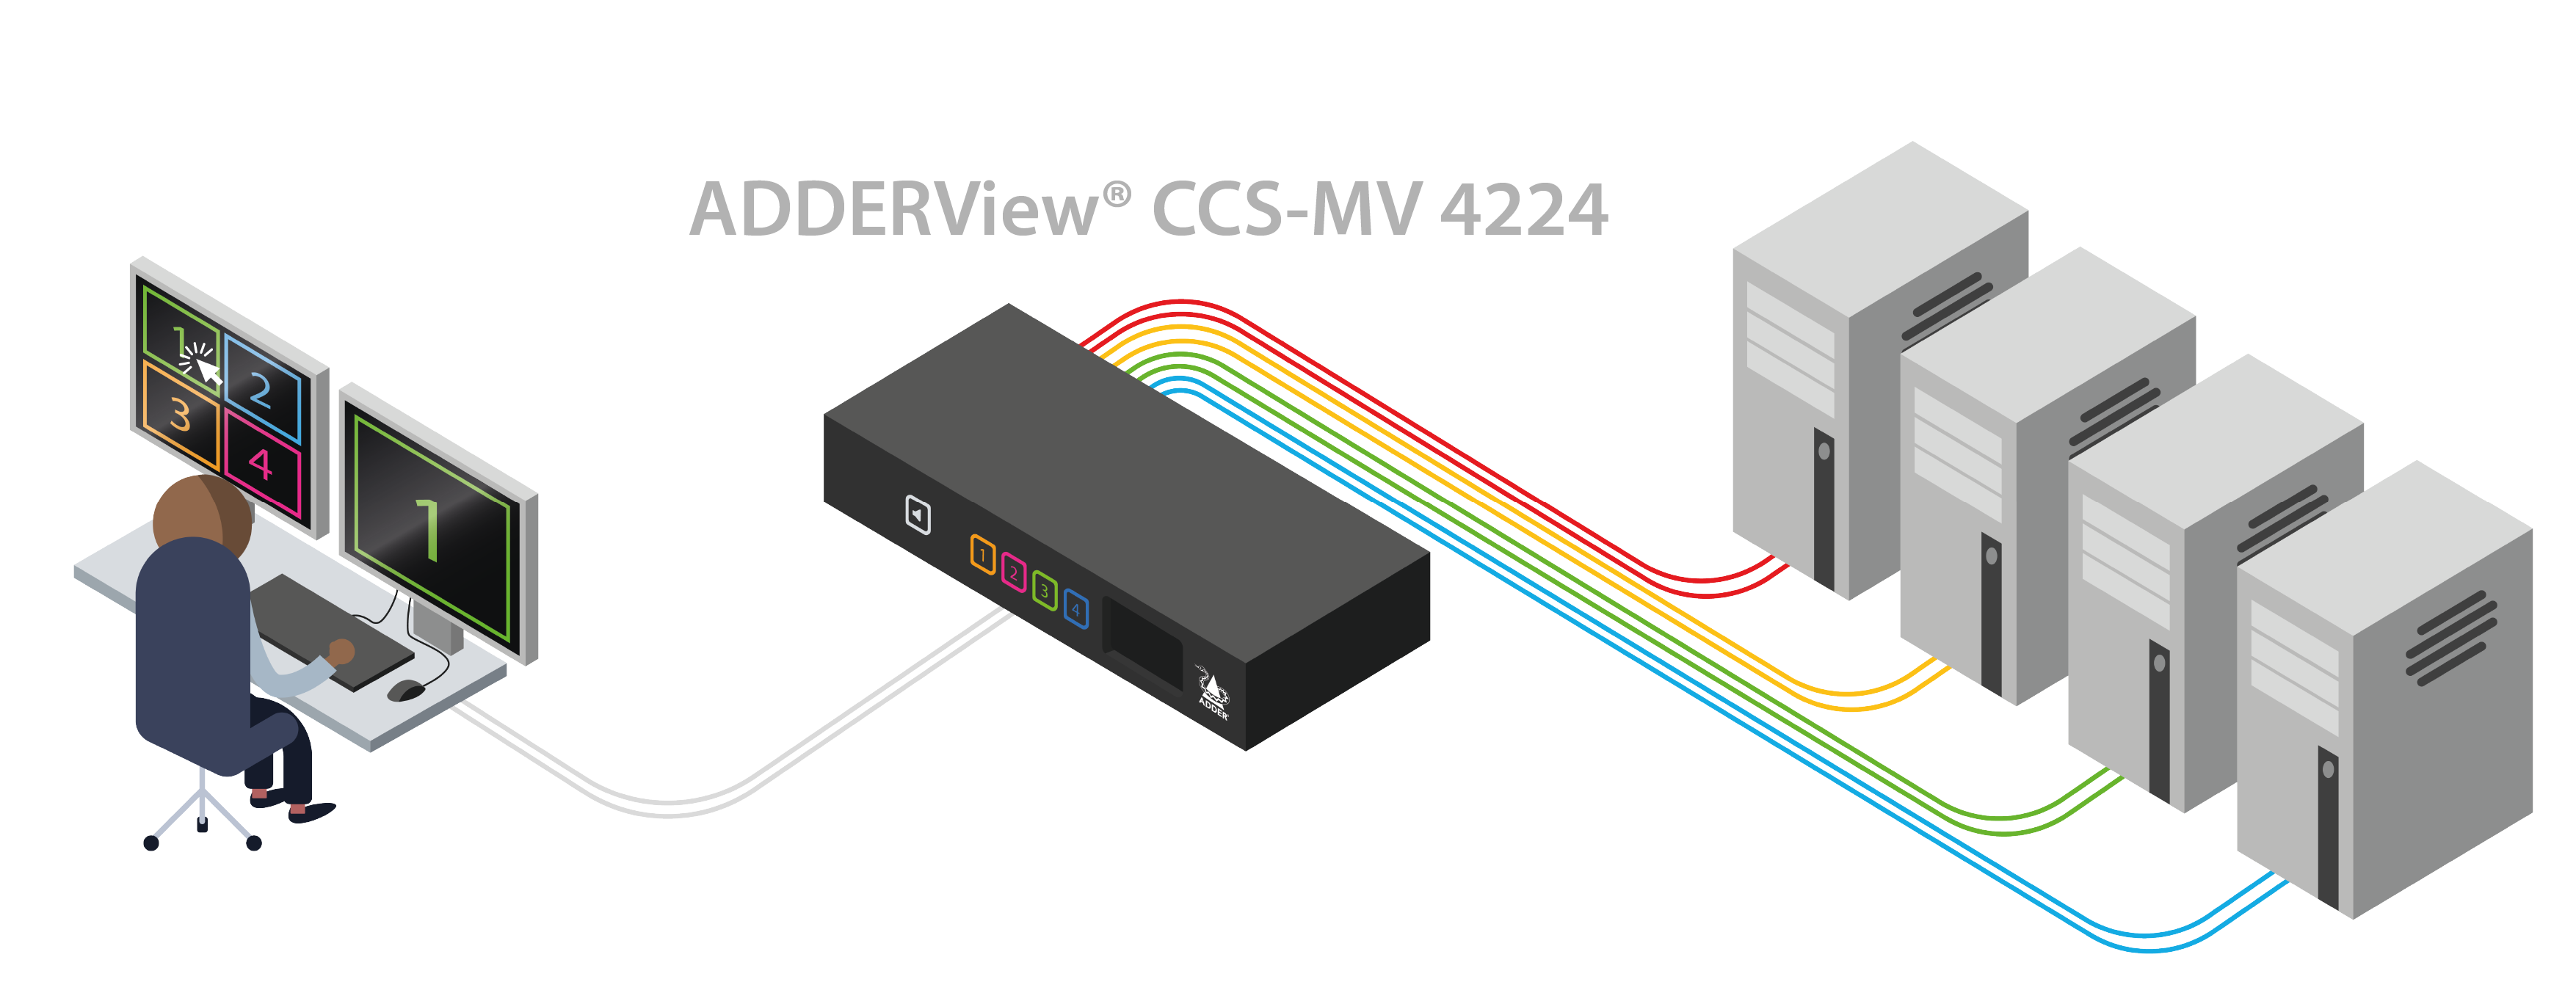 CCSMV4224 KVM Multiviewer Intergated command and control centre diagram